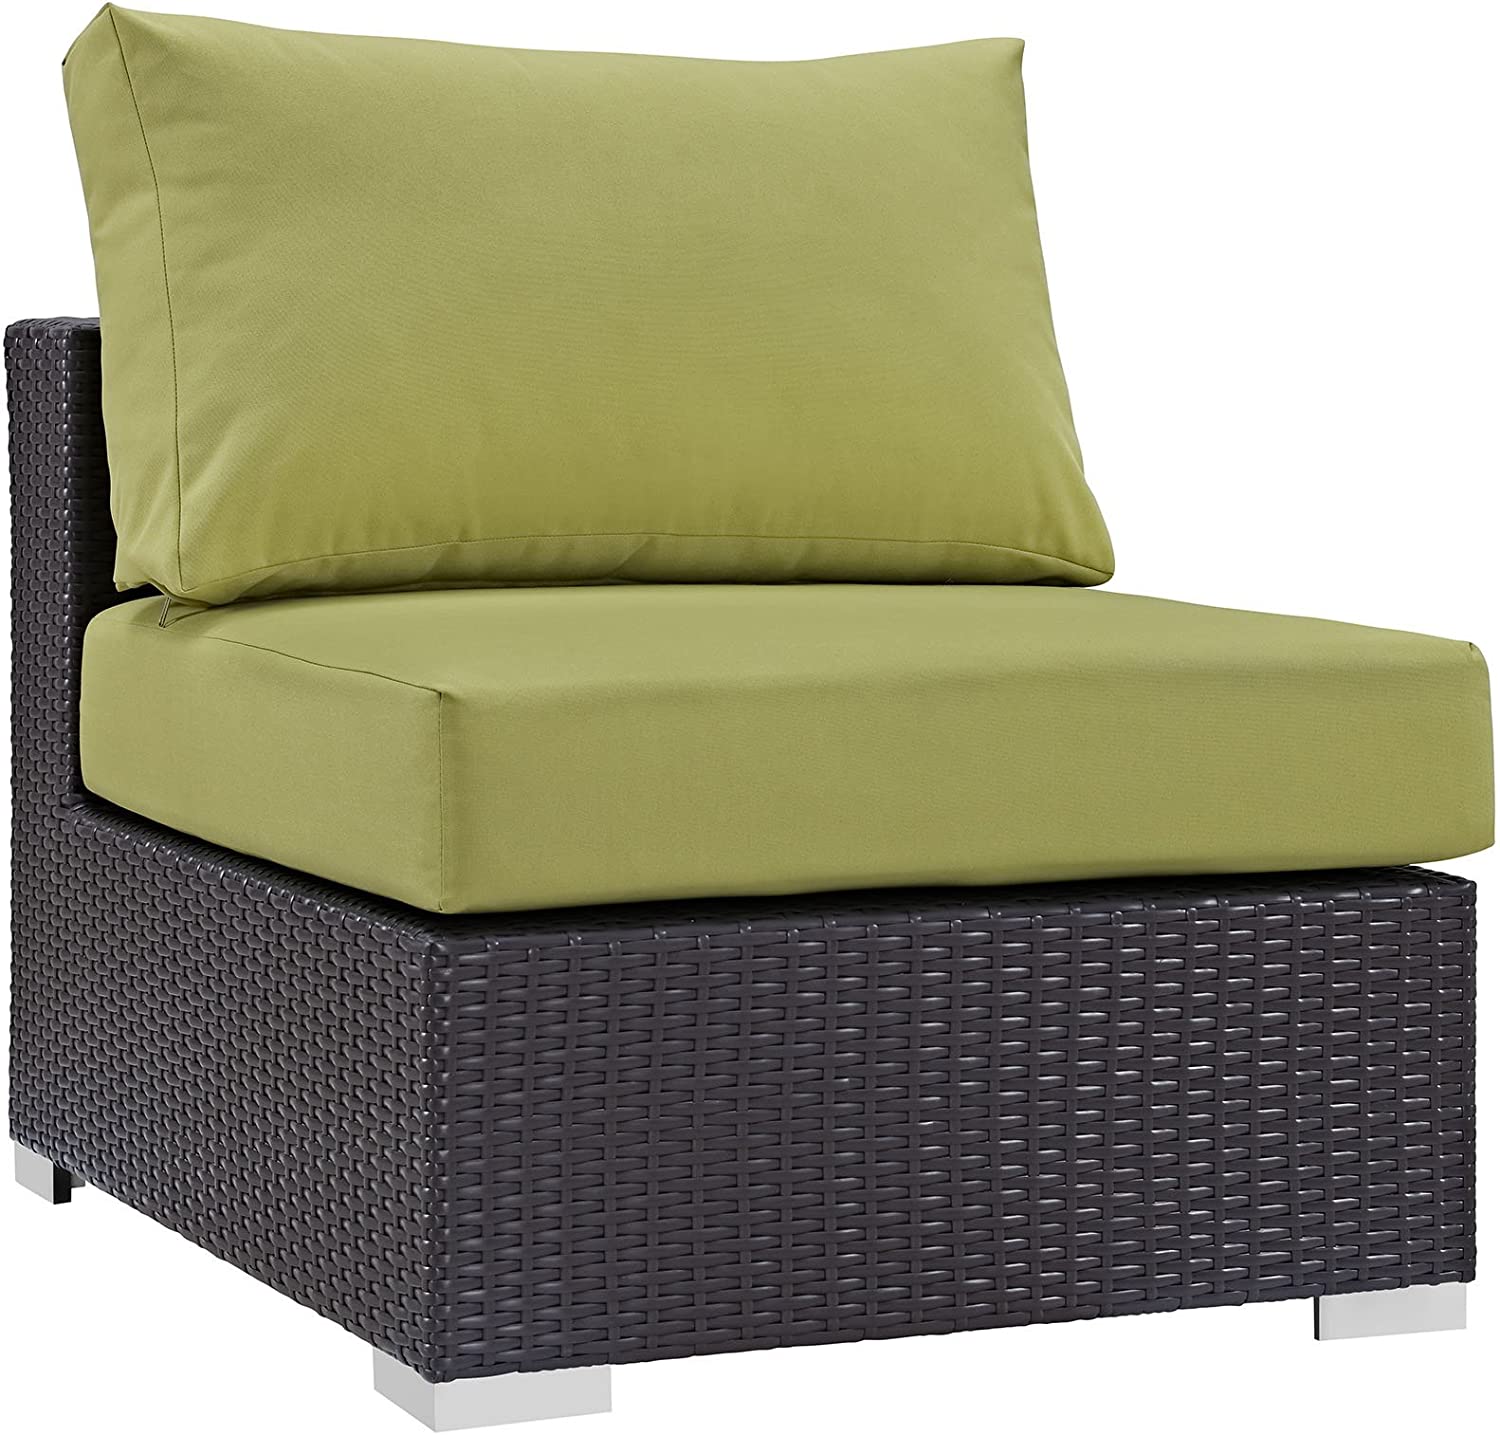 Modway Convene Wicker Rattan Outdoor Patio Sectional Sofa Armless Chair in Espresso Peridot